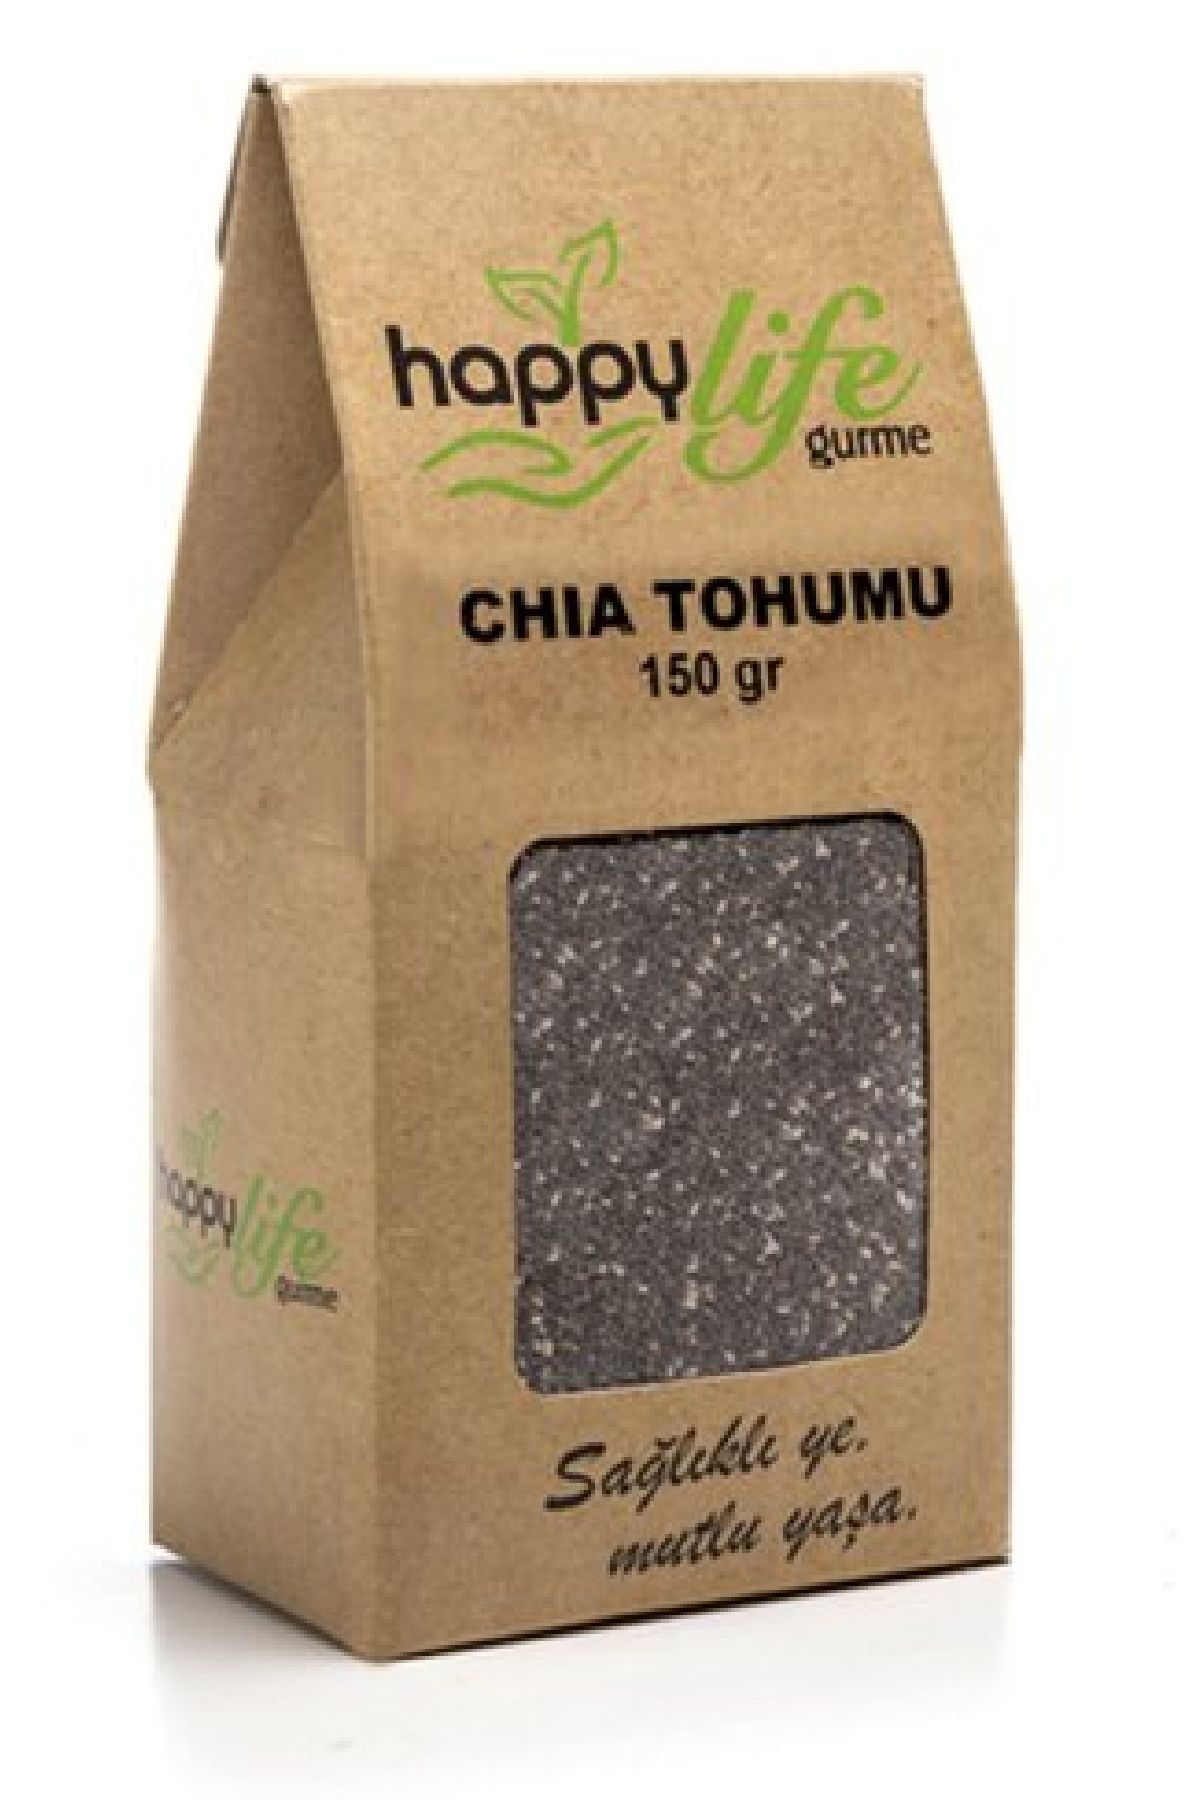 Happy Life Chia Tohumu 150 gr